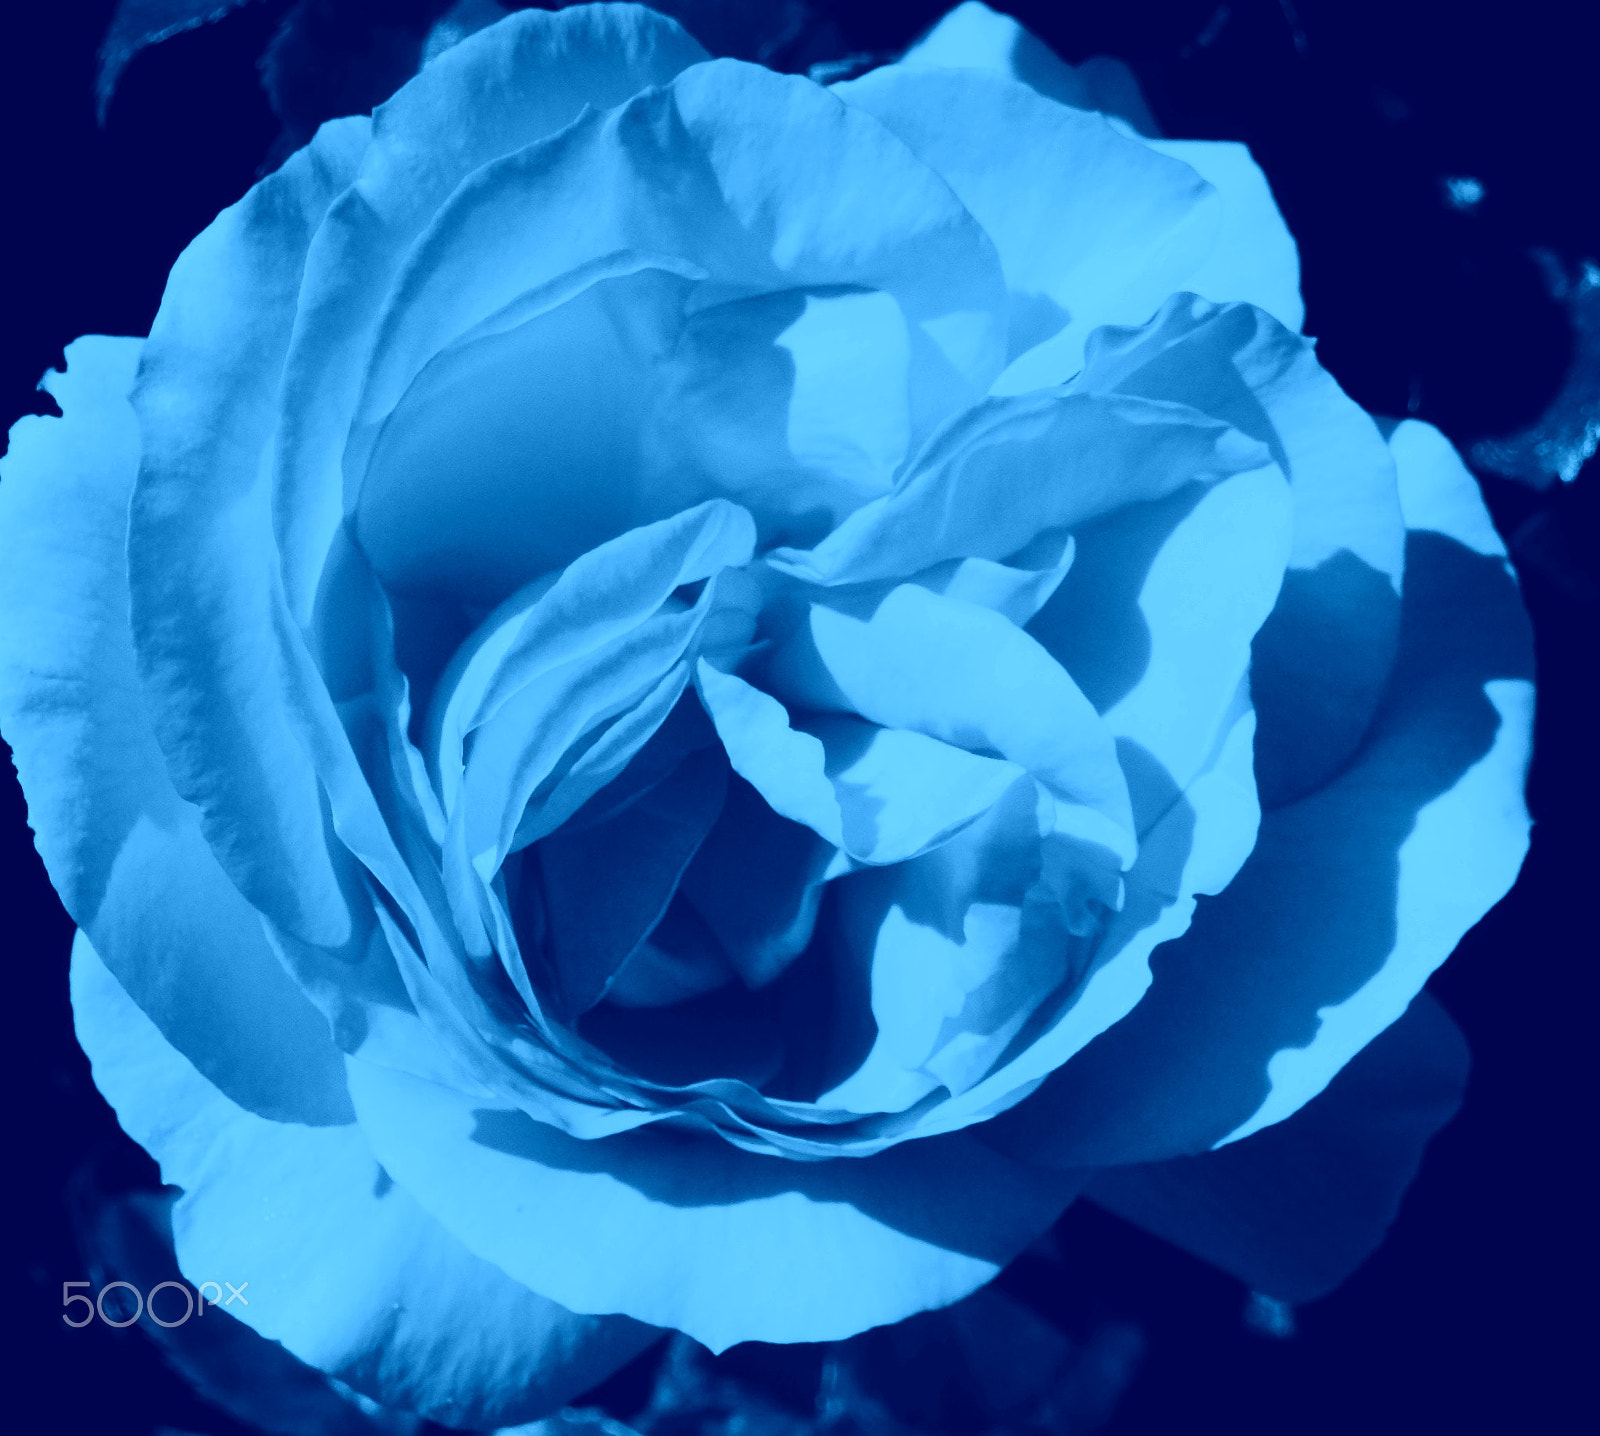 Olympus SZ-12 sample photo. Blue rose photography